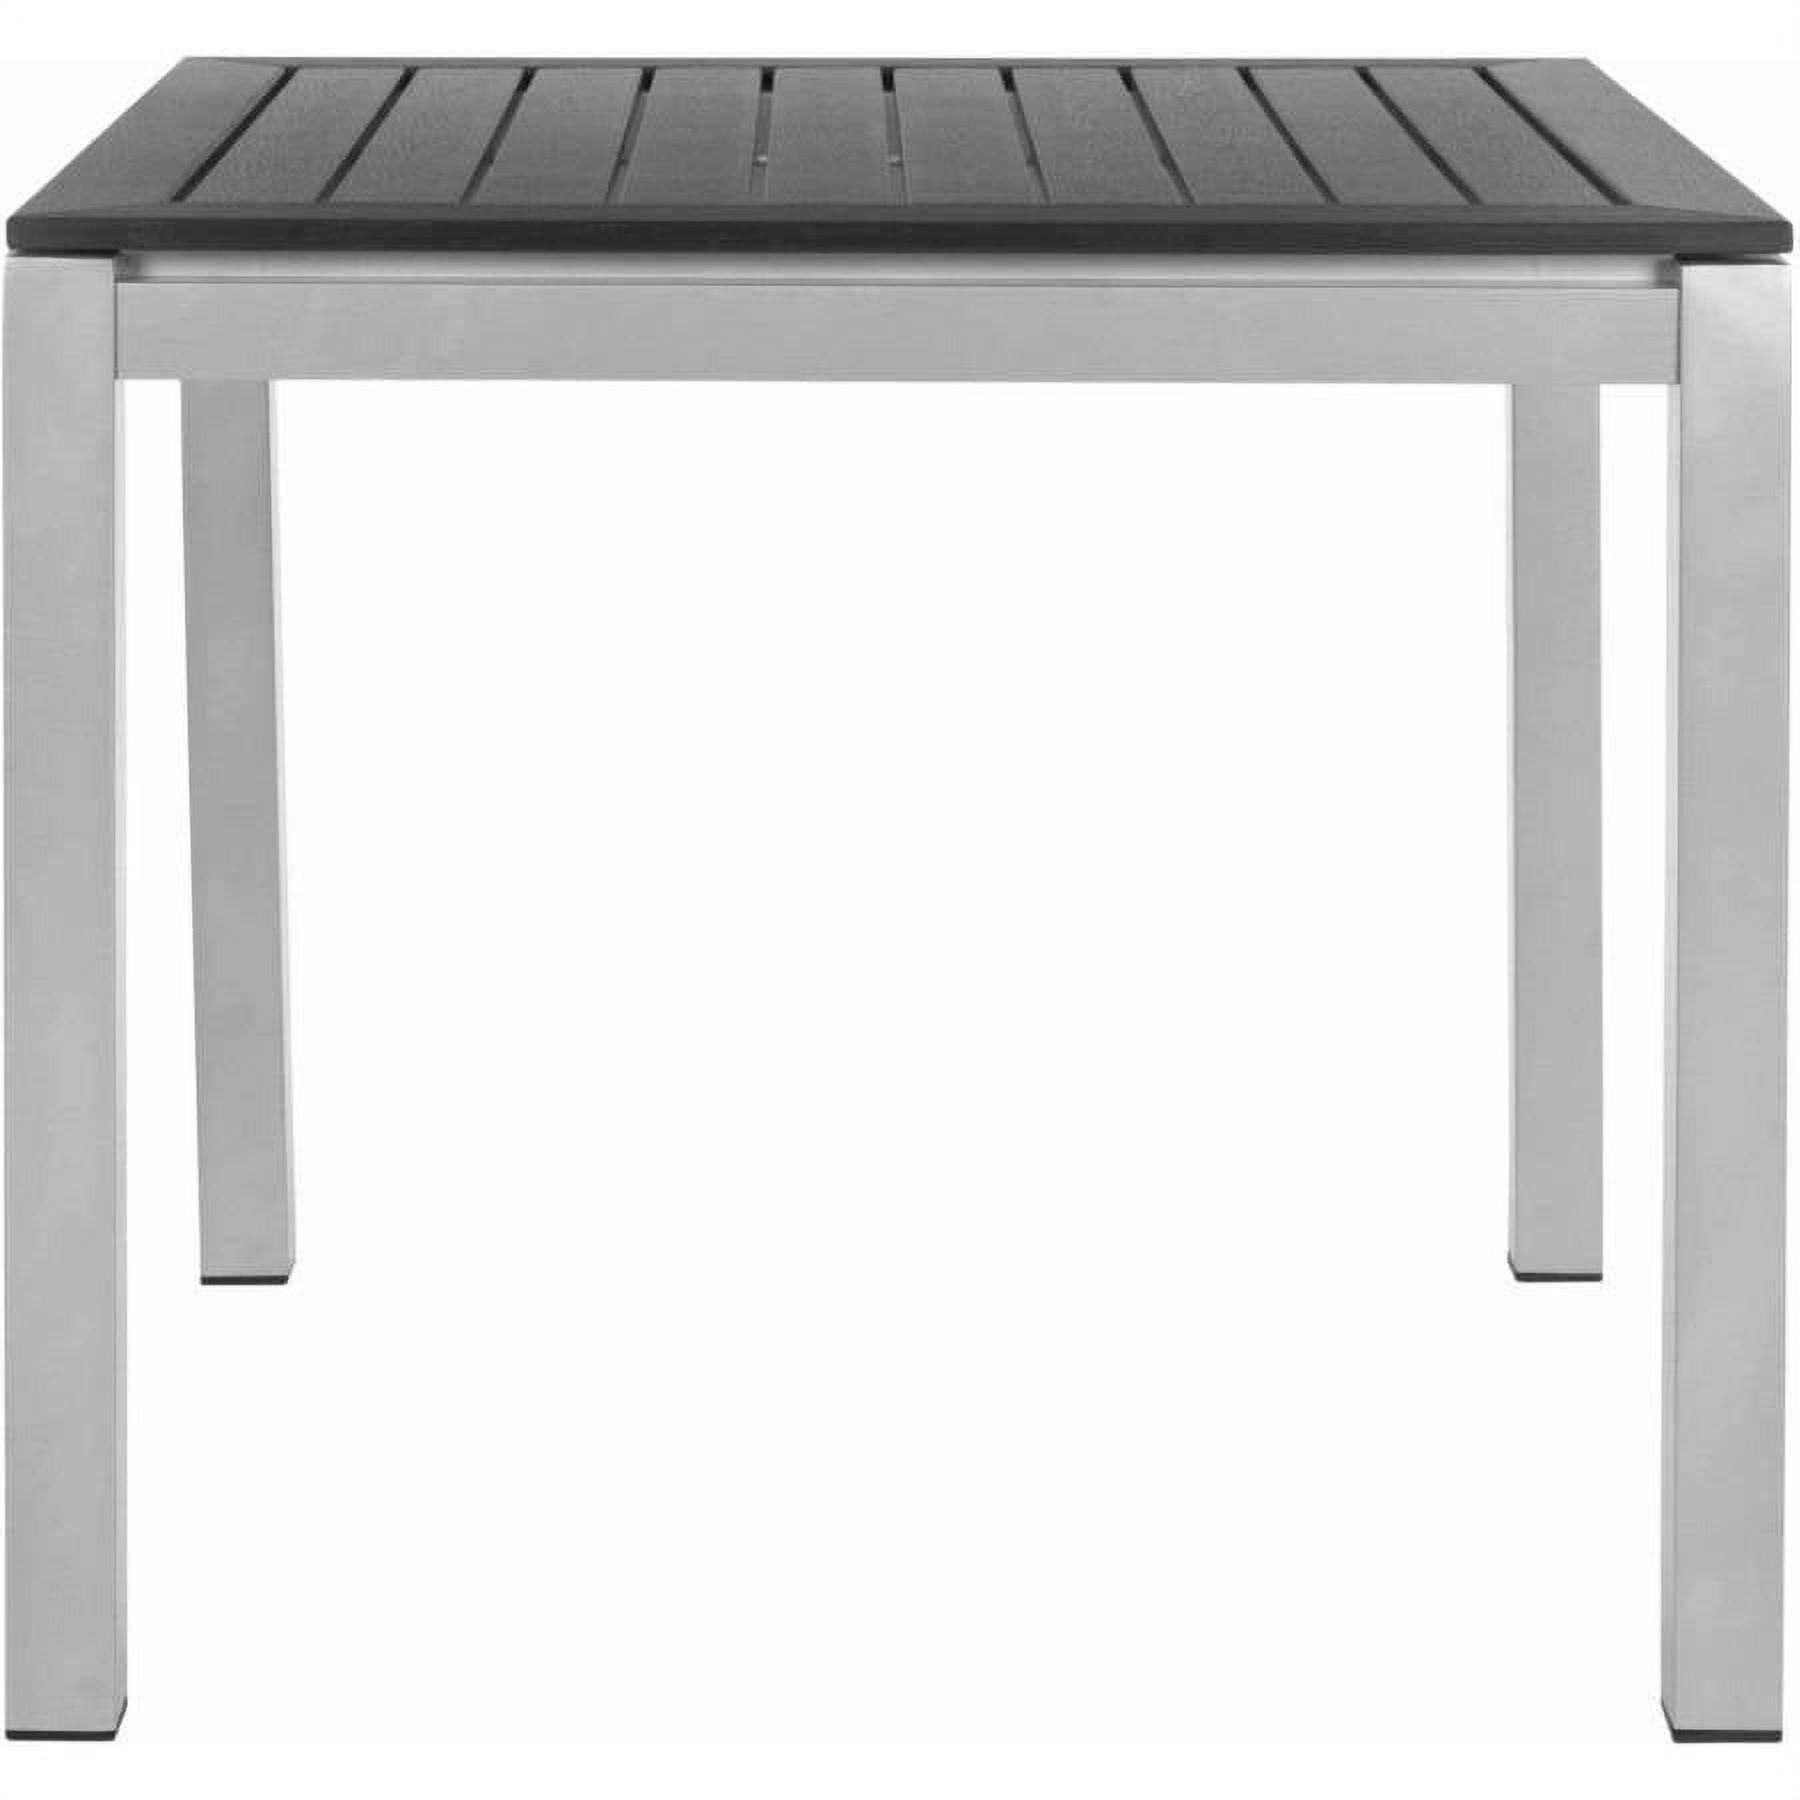 SAFAVIEH Onika Outdoor Patio Square Dining Table, Black/Grey - image 2 of 3